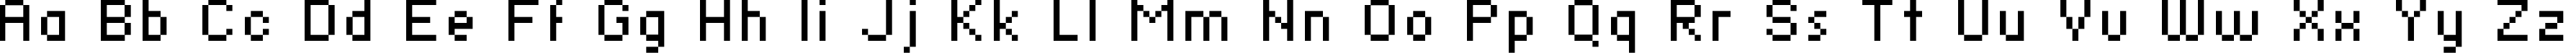 Пример написания английского алфавита шрифтом standard 07_56